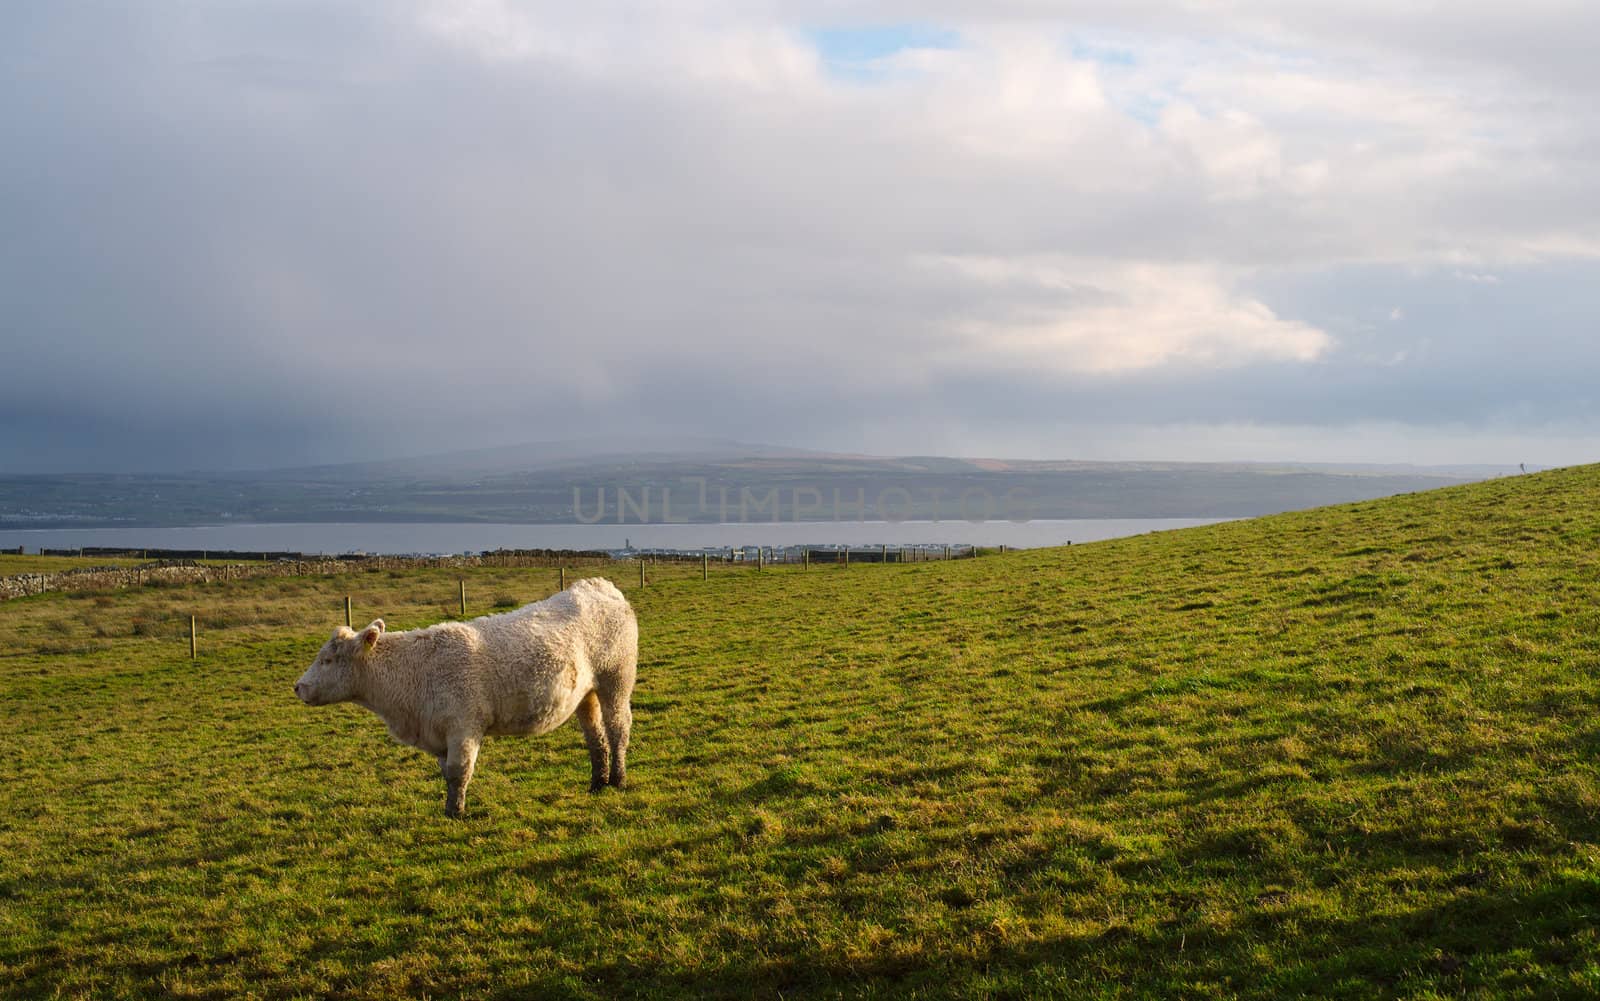 Cow on a field. Ireland. by liseykina